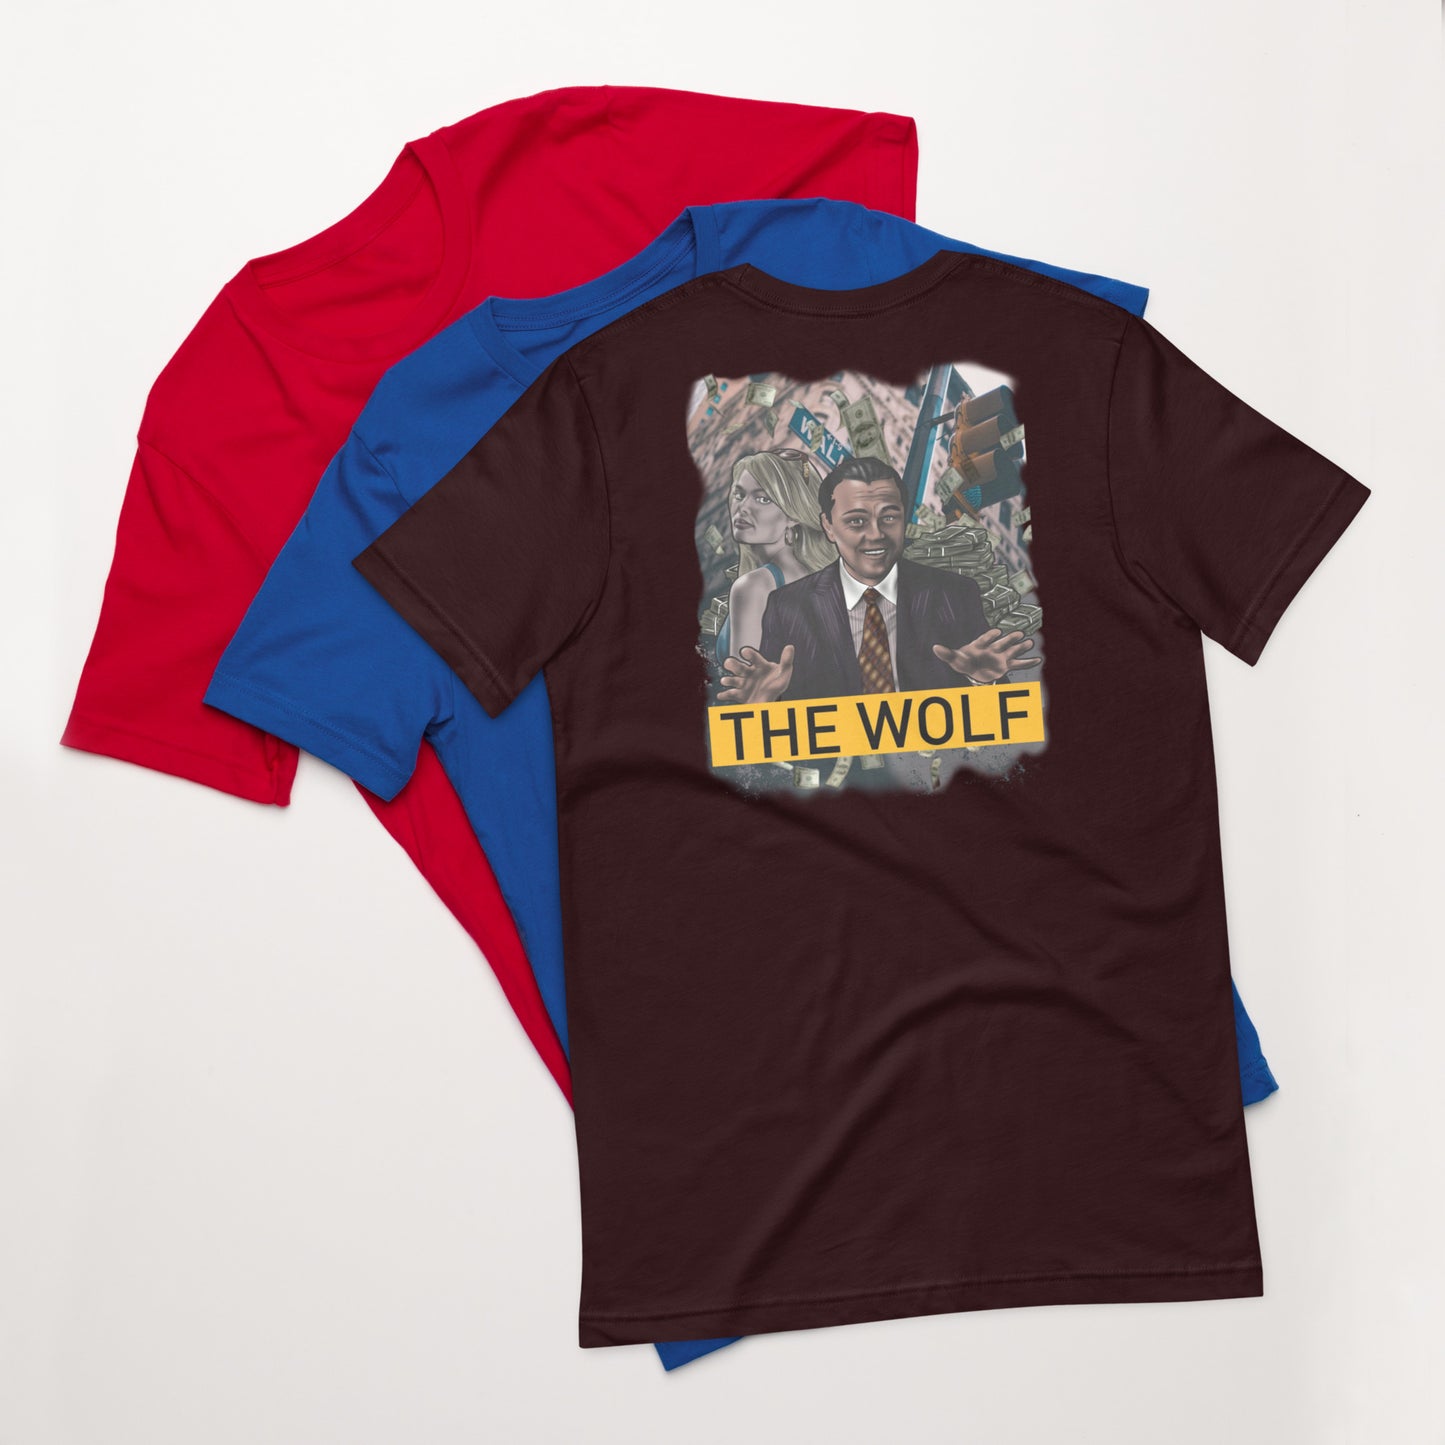 Unisex t-shirt (The Wolf)